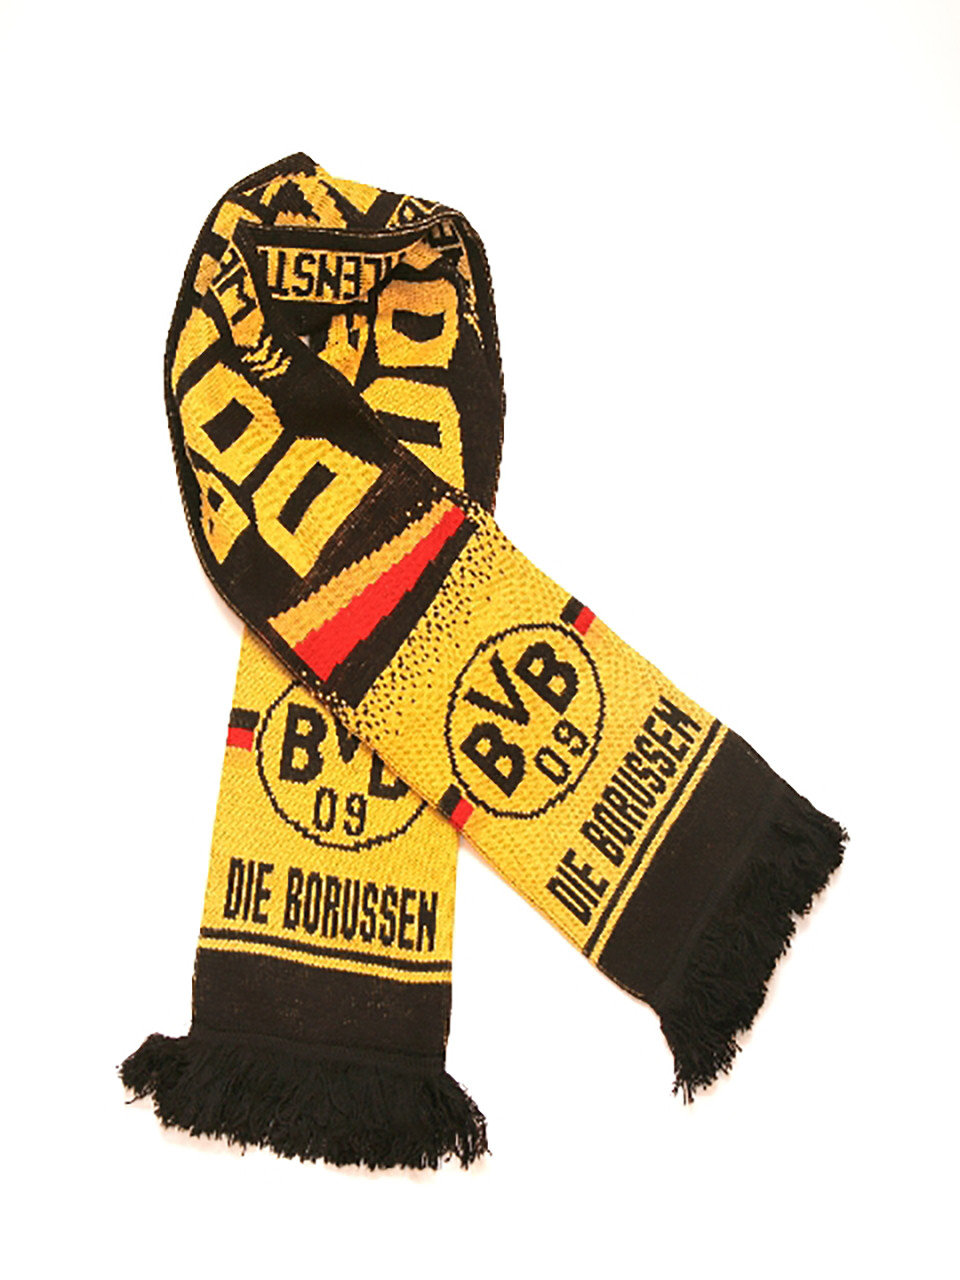 Die Borussen Dortmund FC Fan Scarf - Licensed Fan Scarf